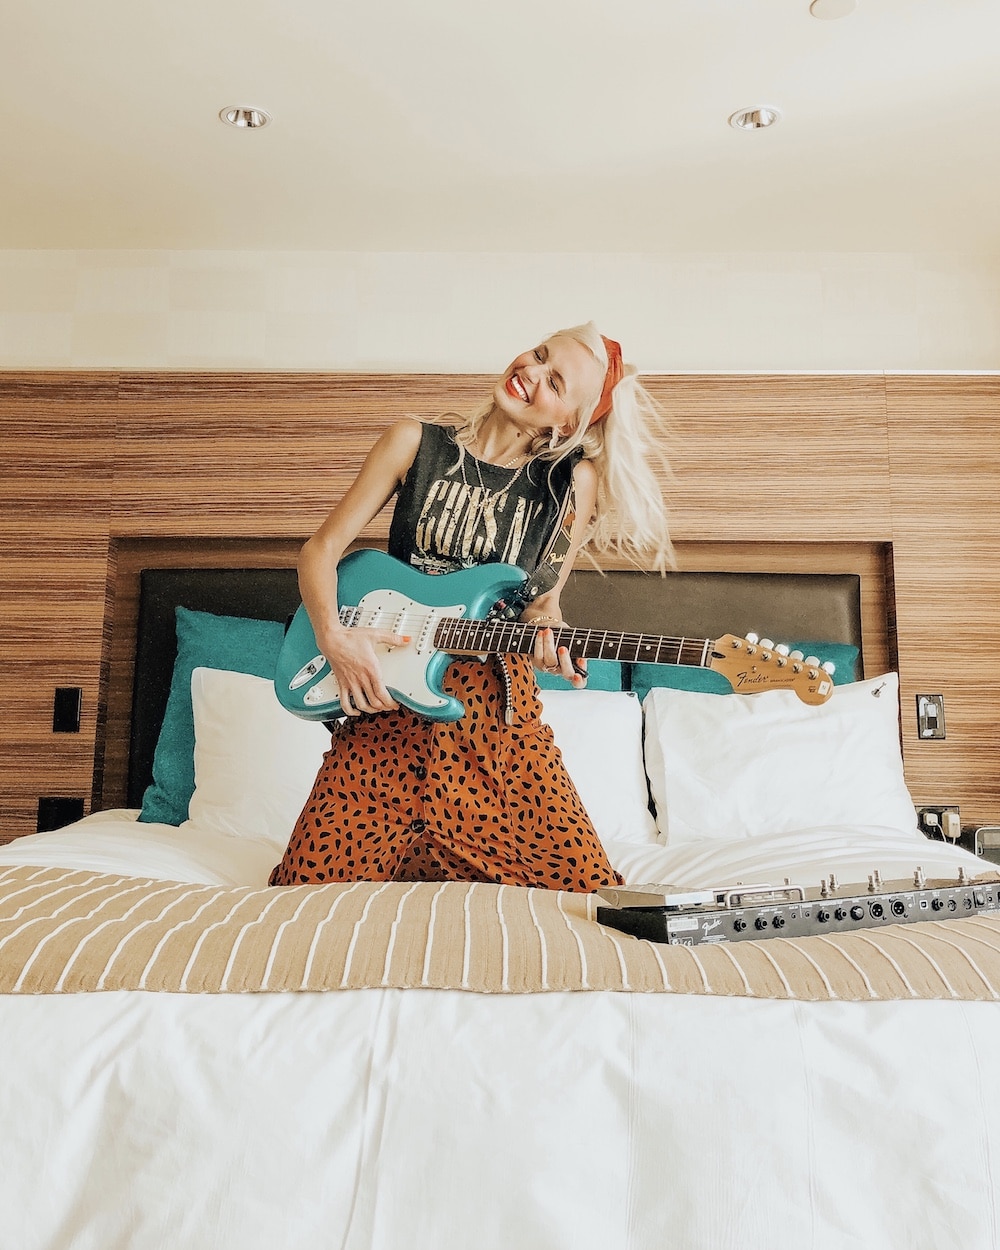 new hotel room beds - seminole hard rock tampa